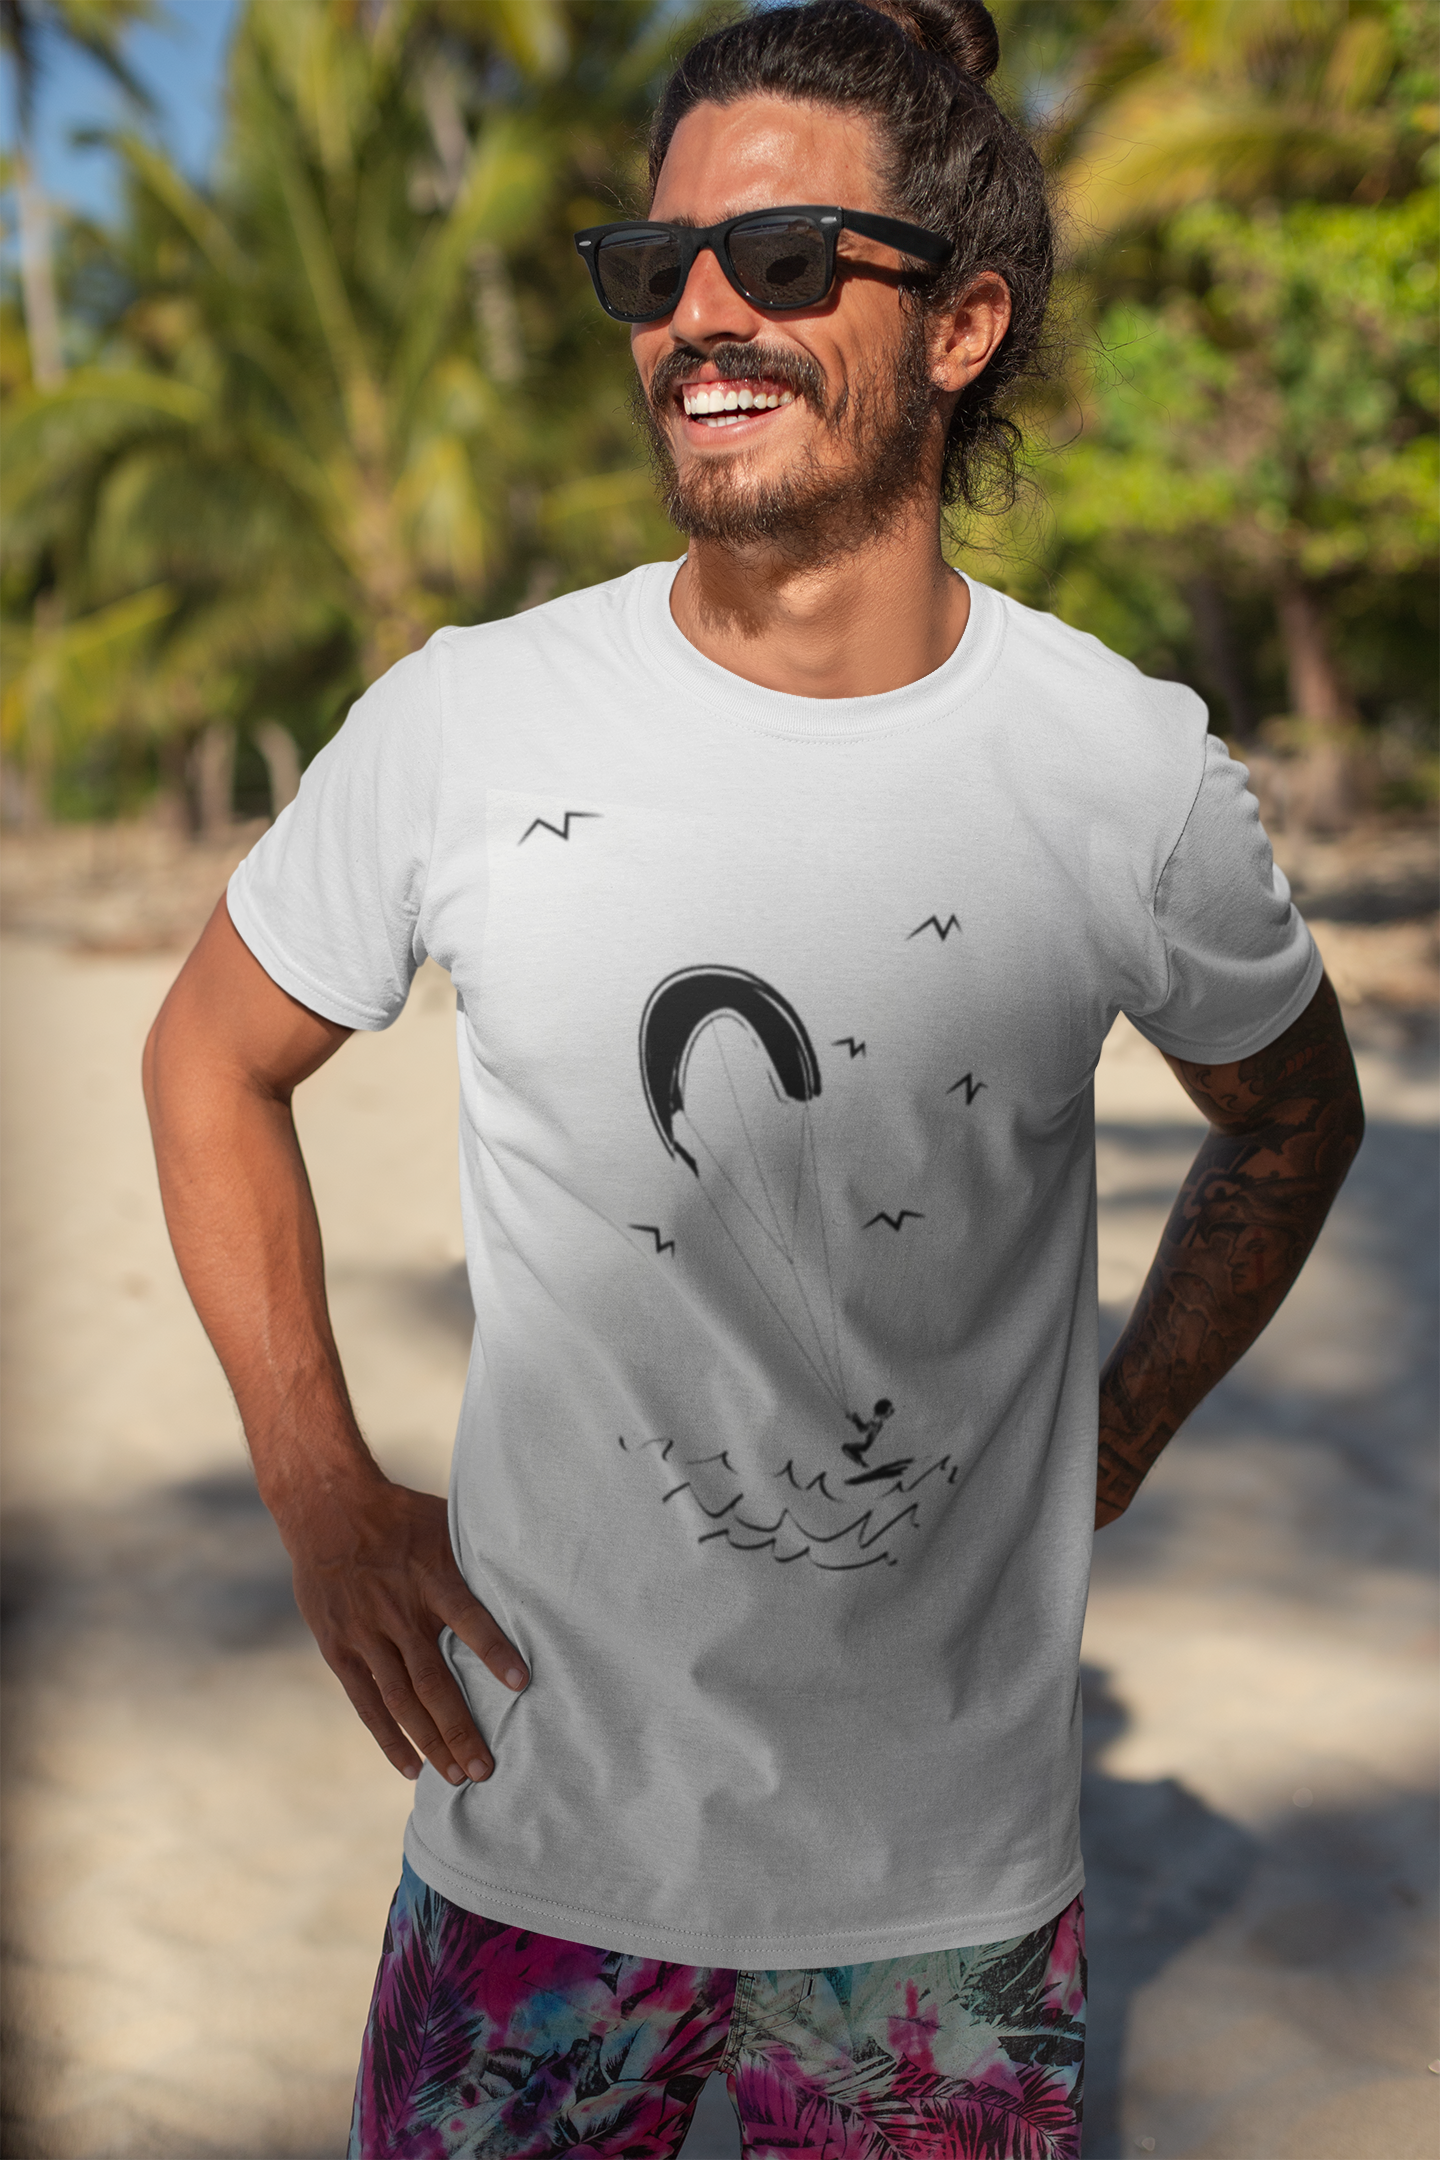 Kite Surfing t-shirt